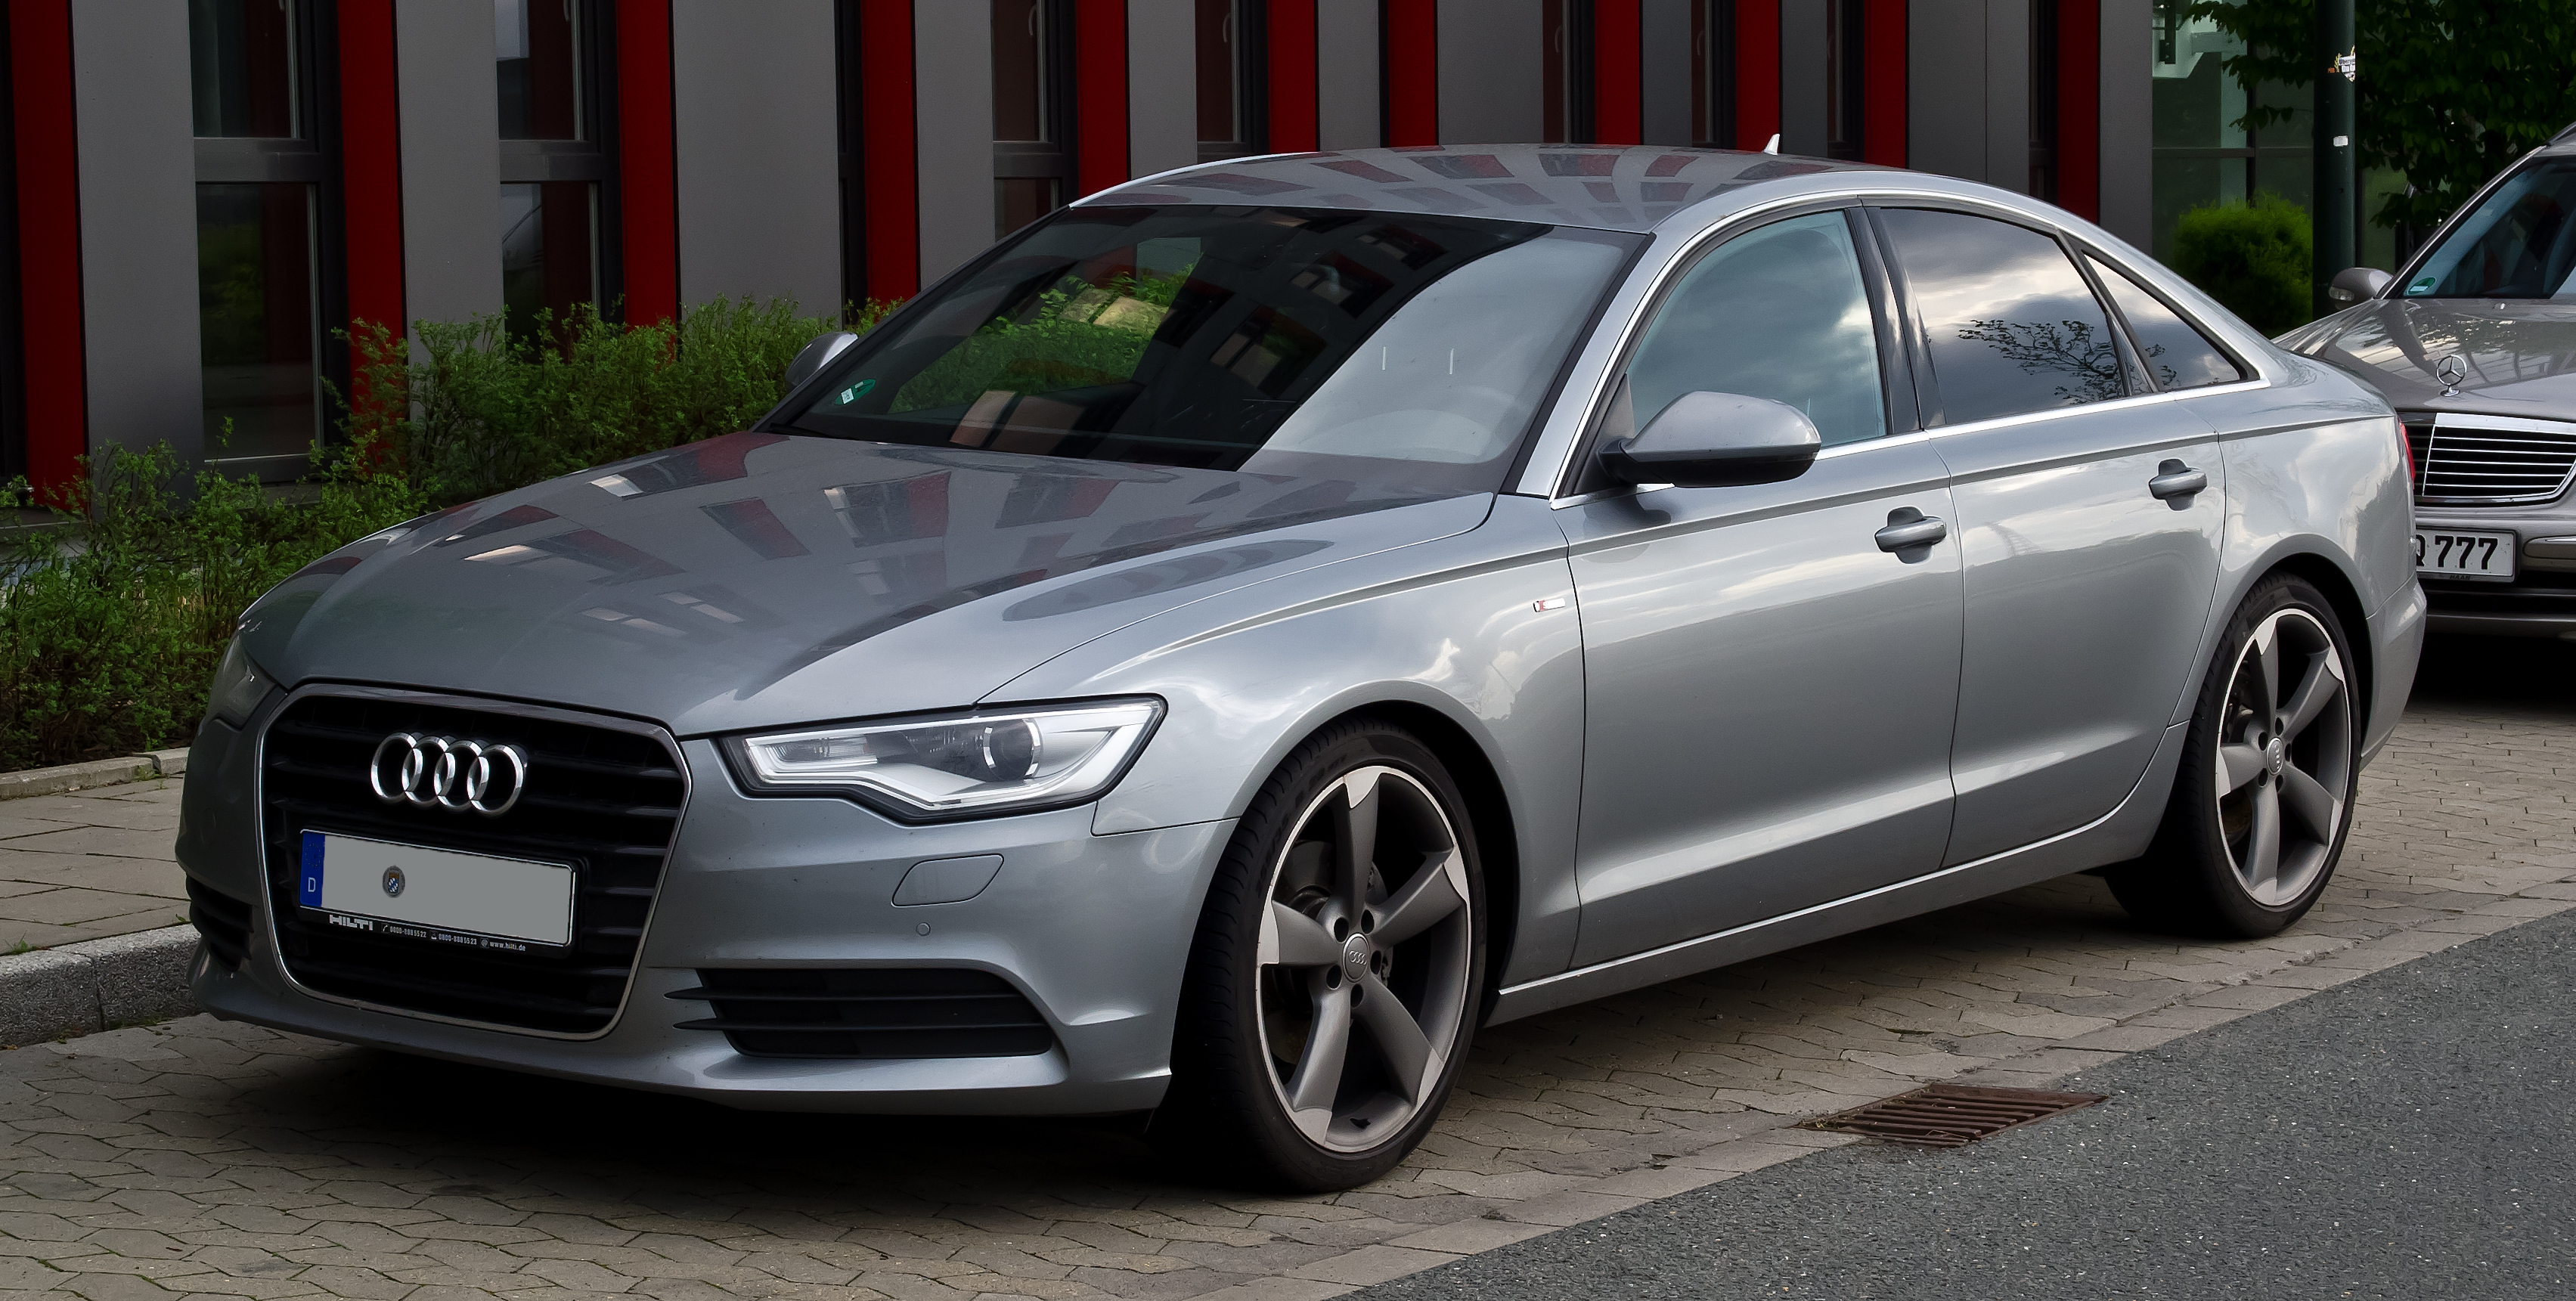 Audi_A6_S-line_%28C7%29_%E2%80%93_Frontansicht,_1._Mai_2012,_D%C3%BCsseldorf.jpg